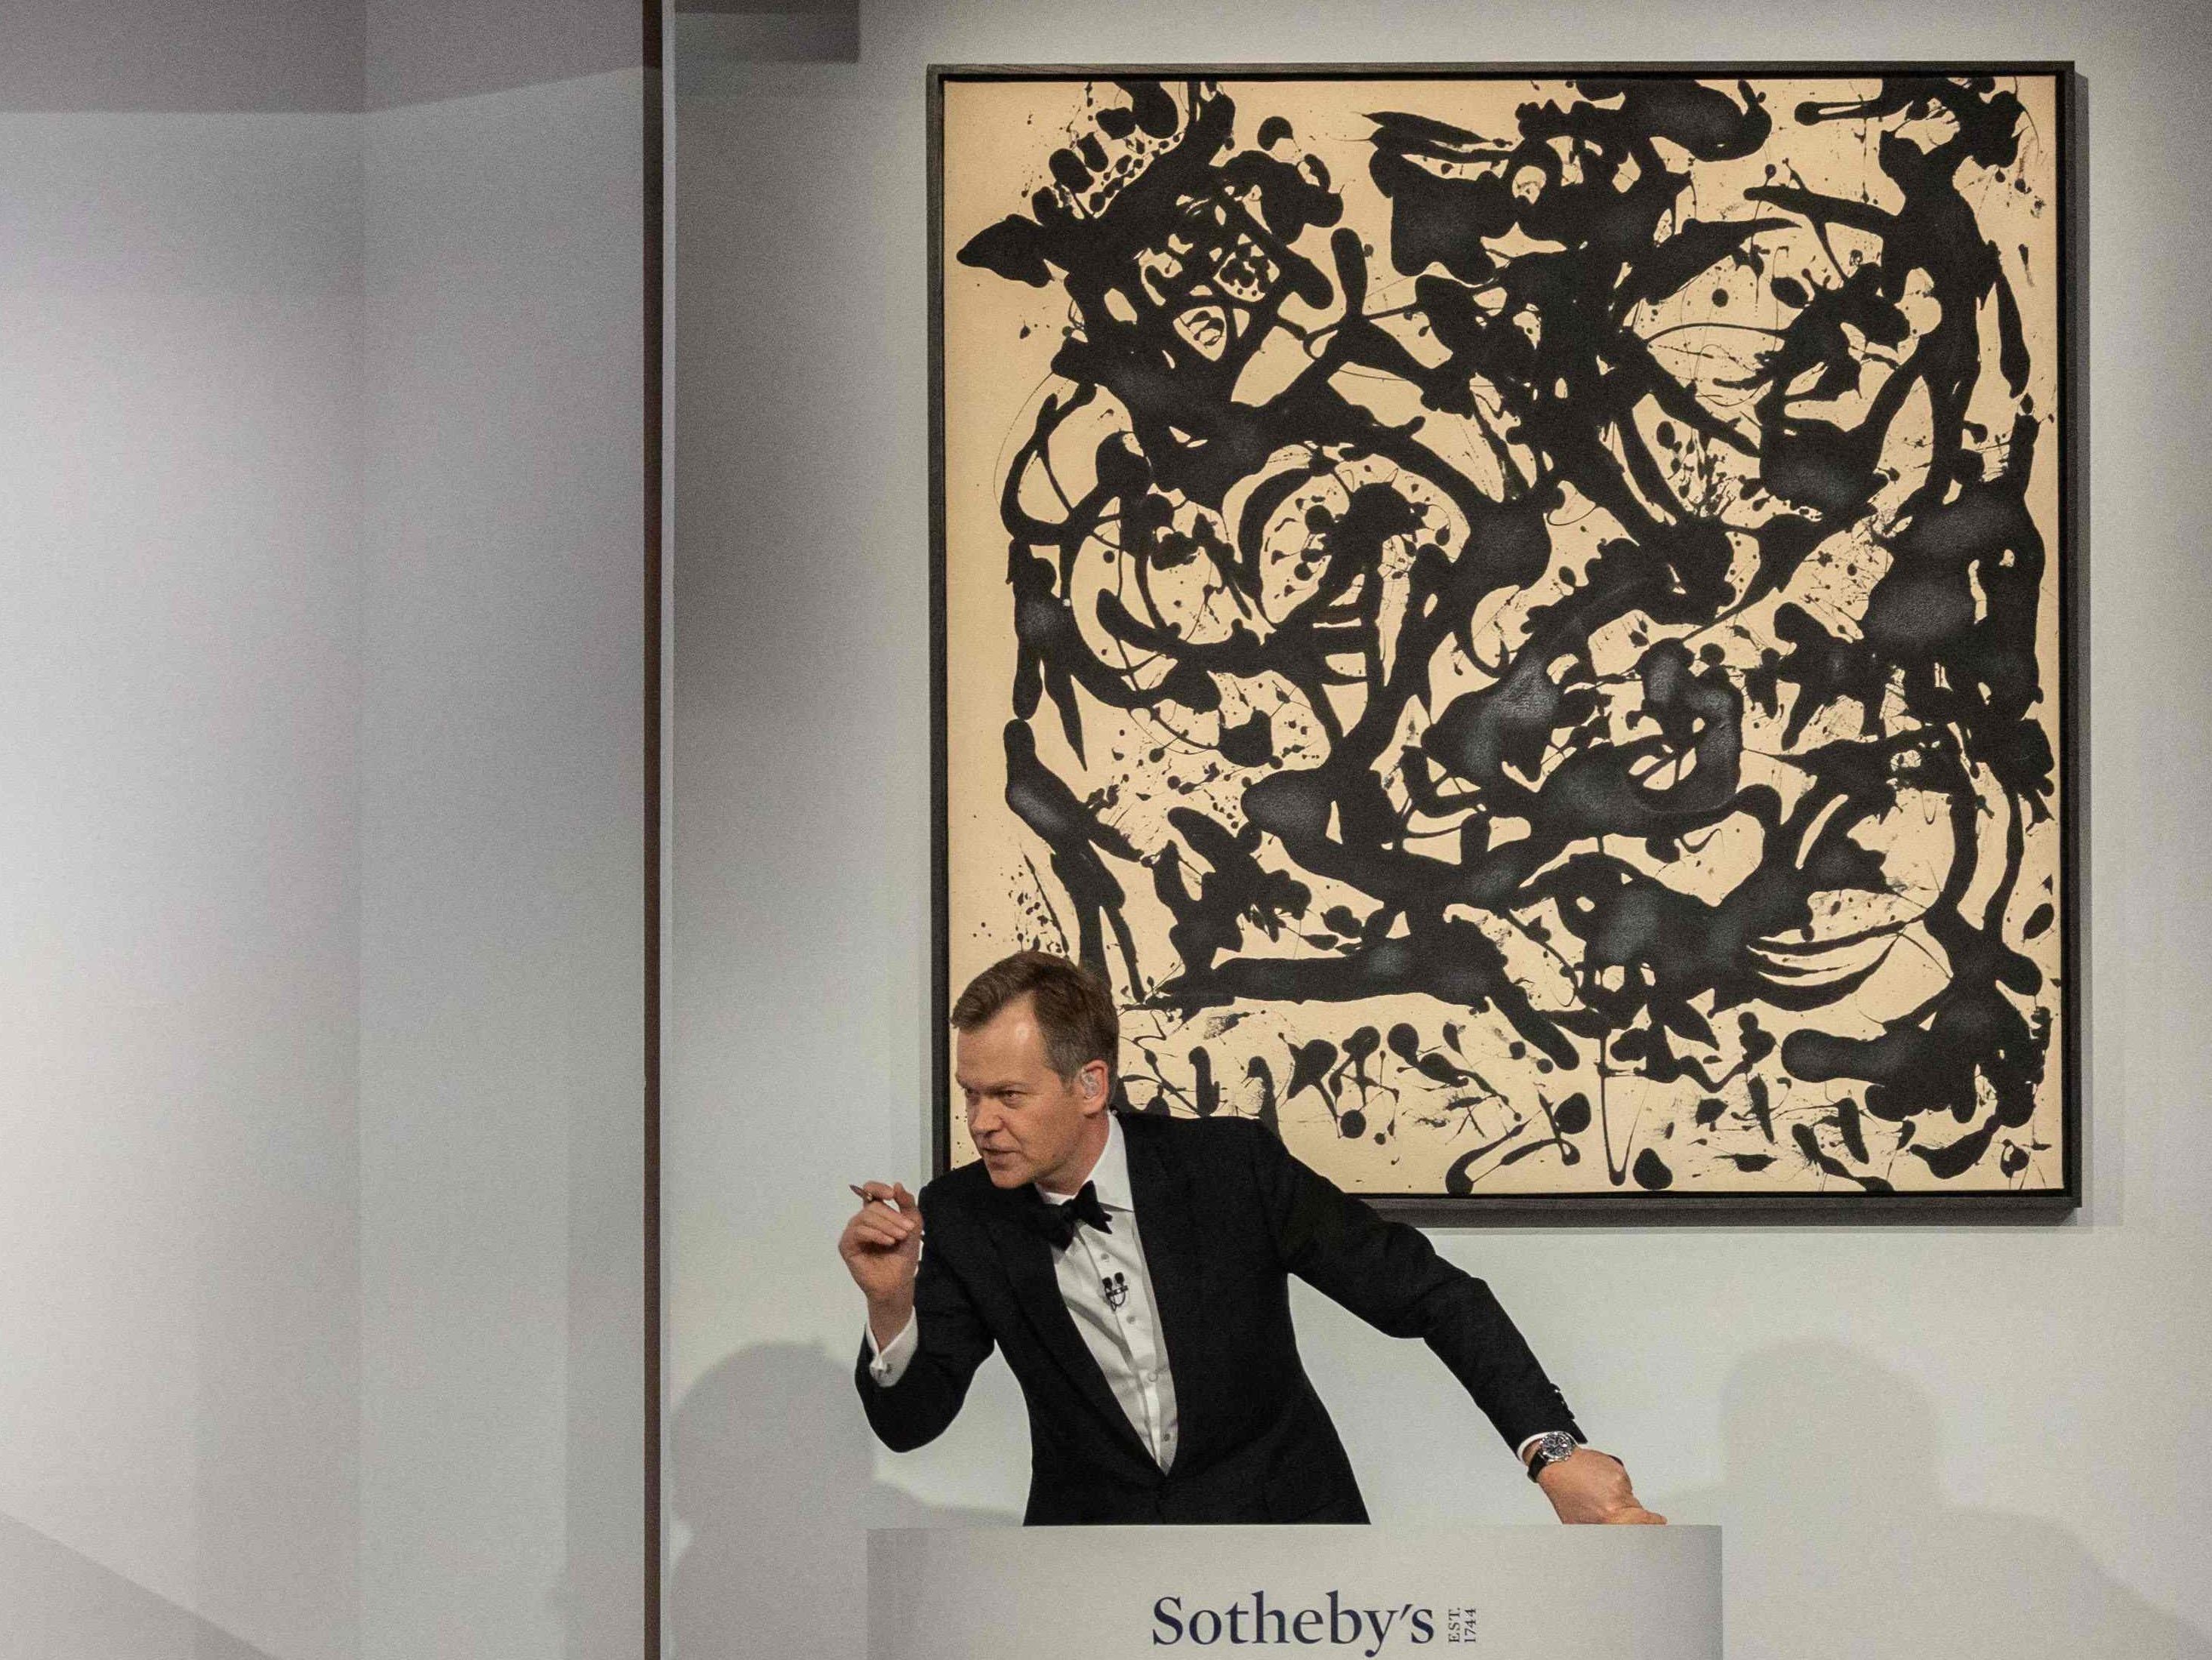 Divorce battle fetches most expensive art auction ever at $922m